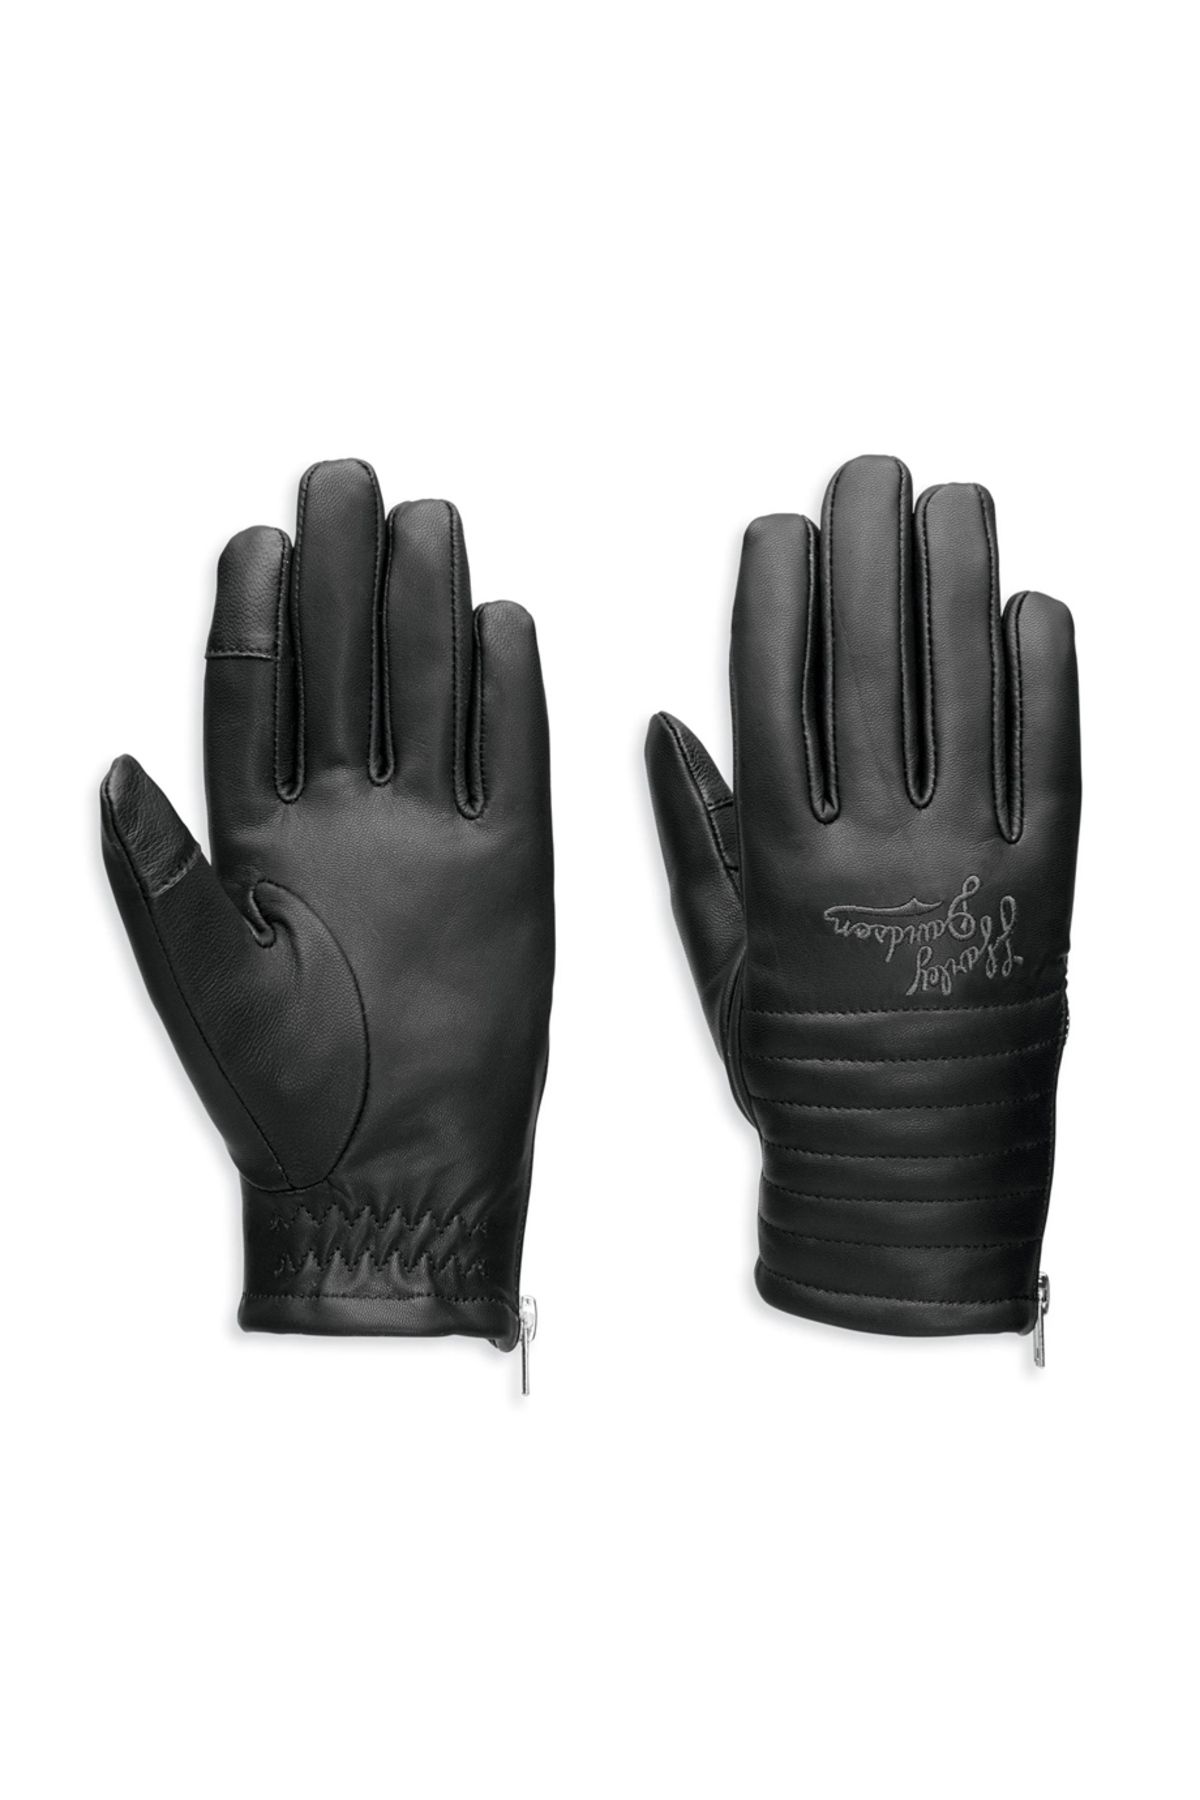 Harley Davidson Harley-davidson Women's Journey Leather Glove - Black